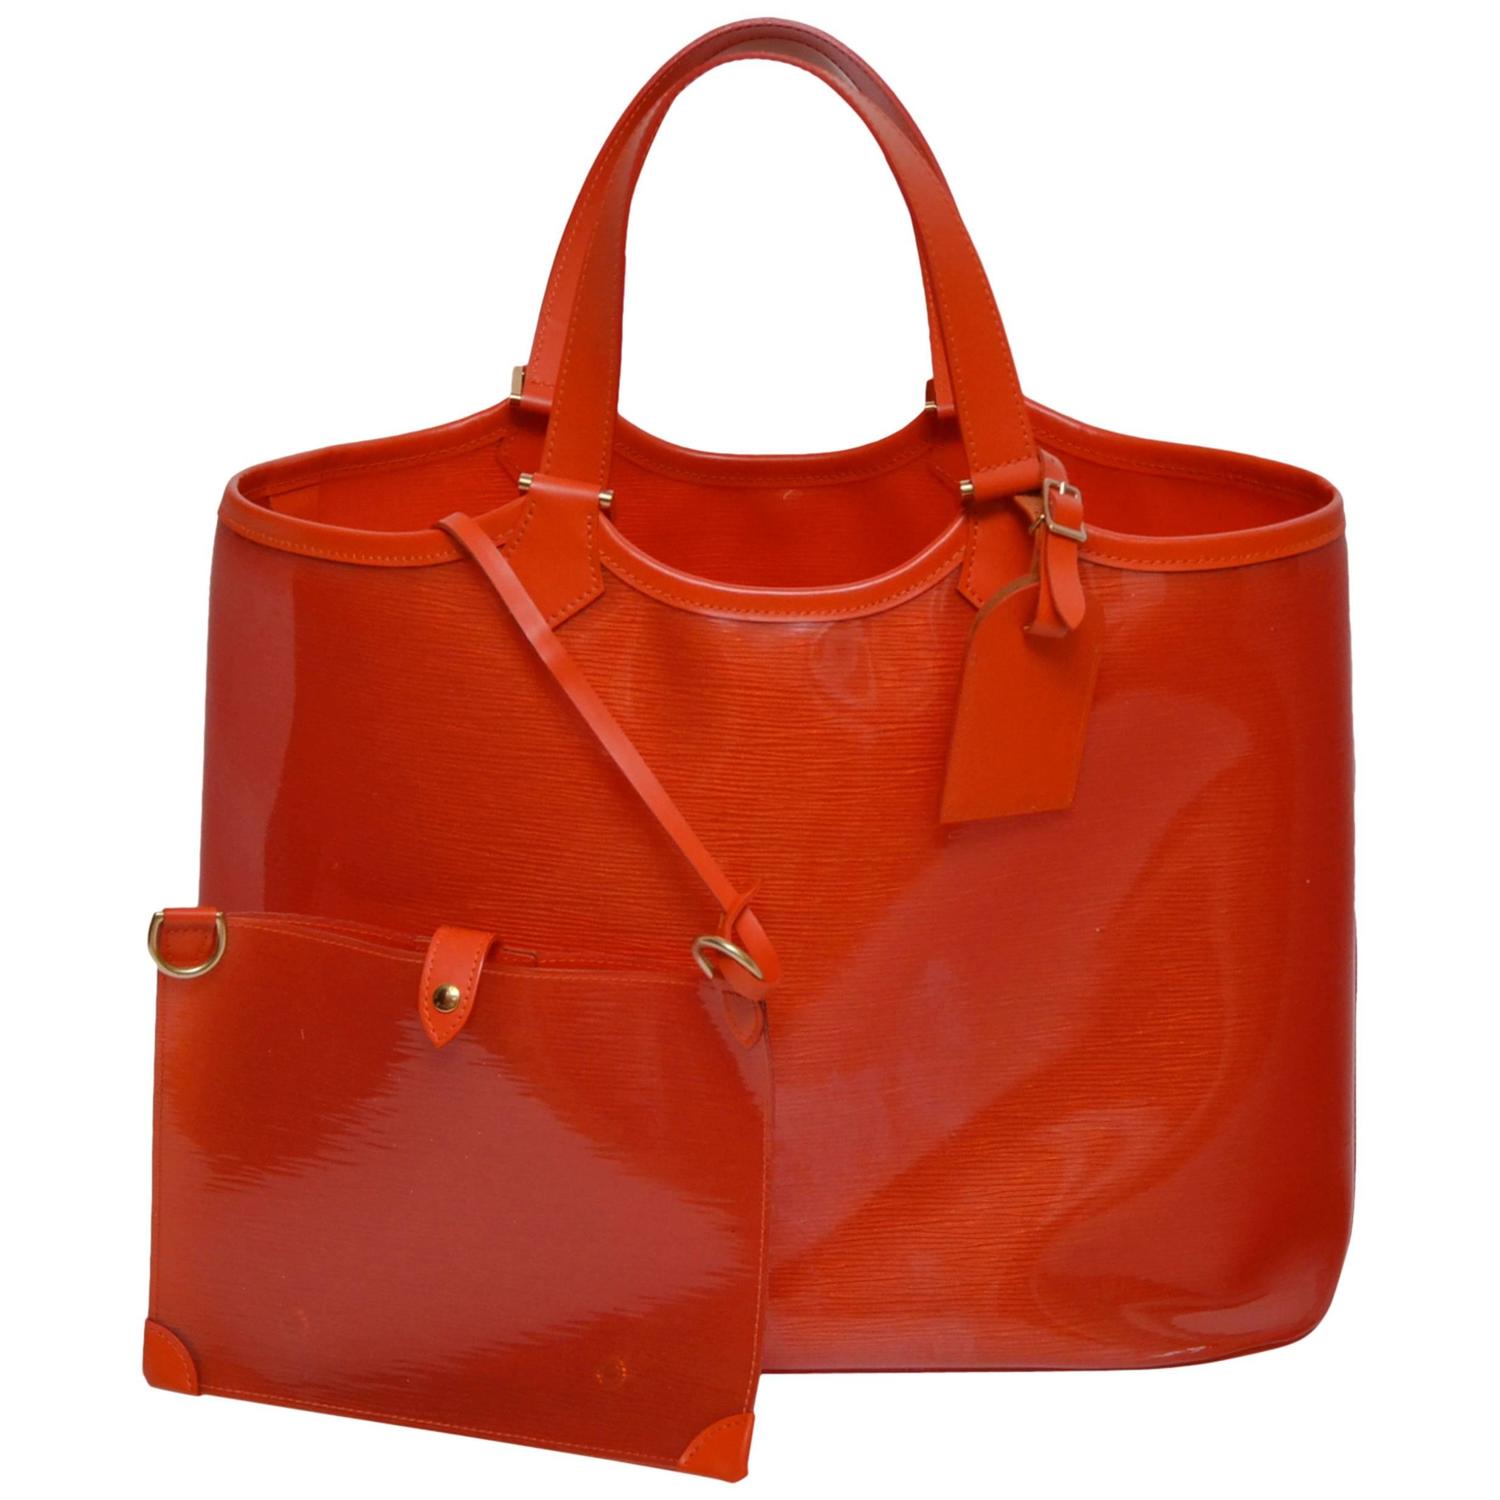 Louis Vuitton Orange Beach Bag For Sale at 1stdibs